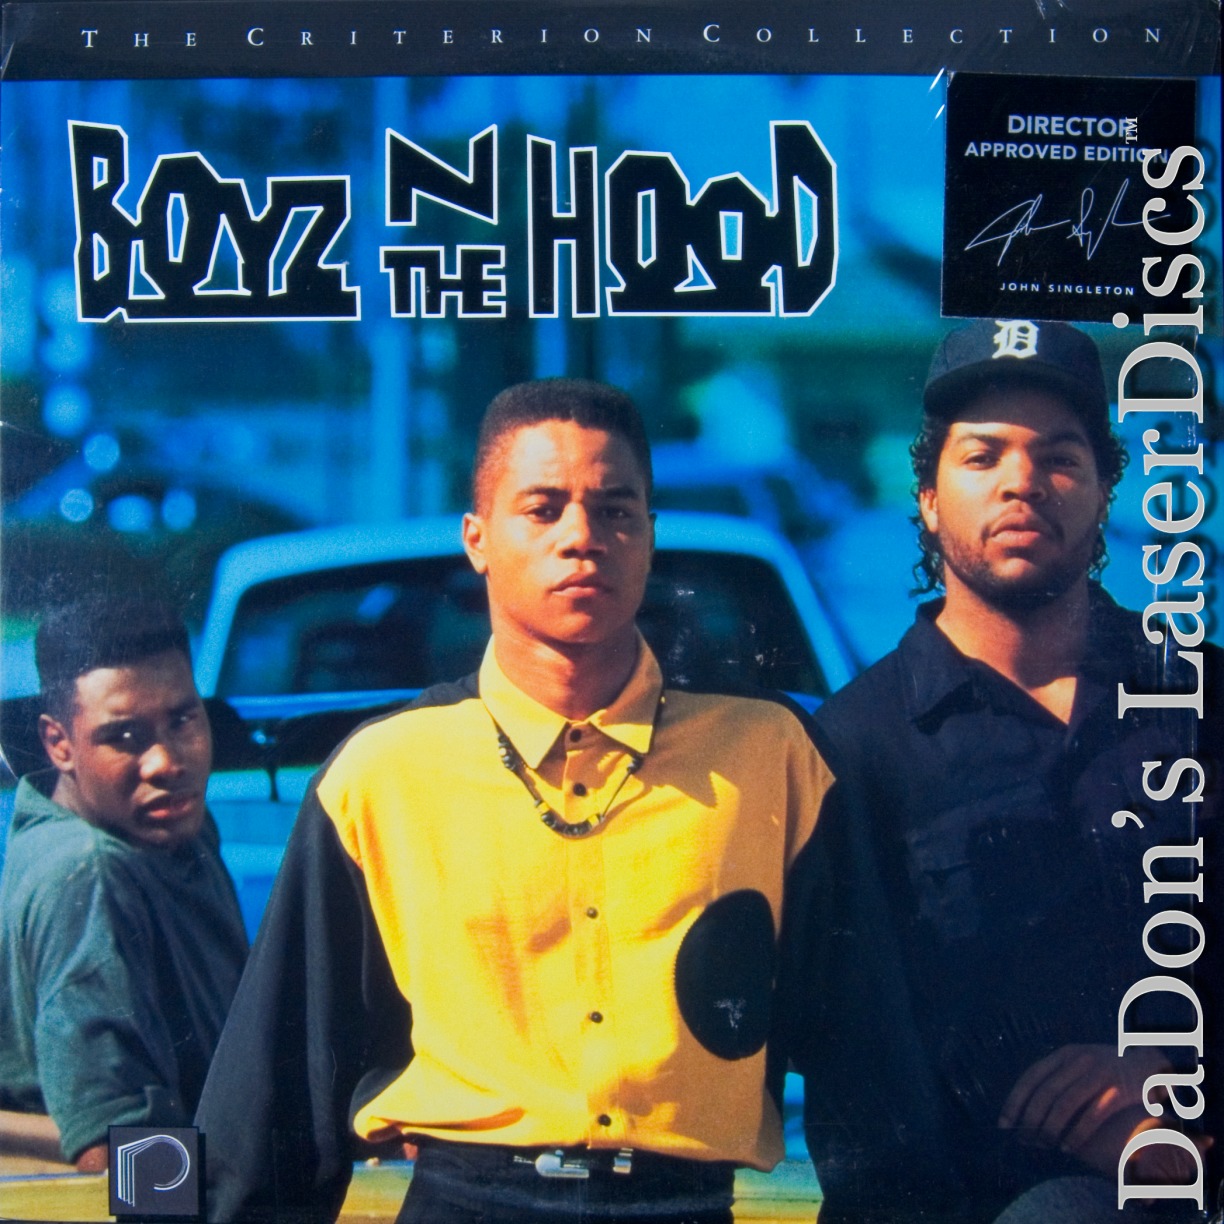 boyz n the hood free online